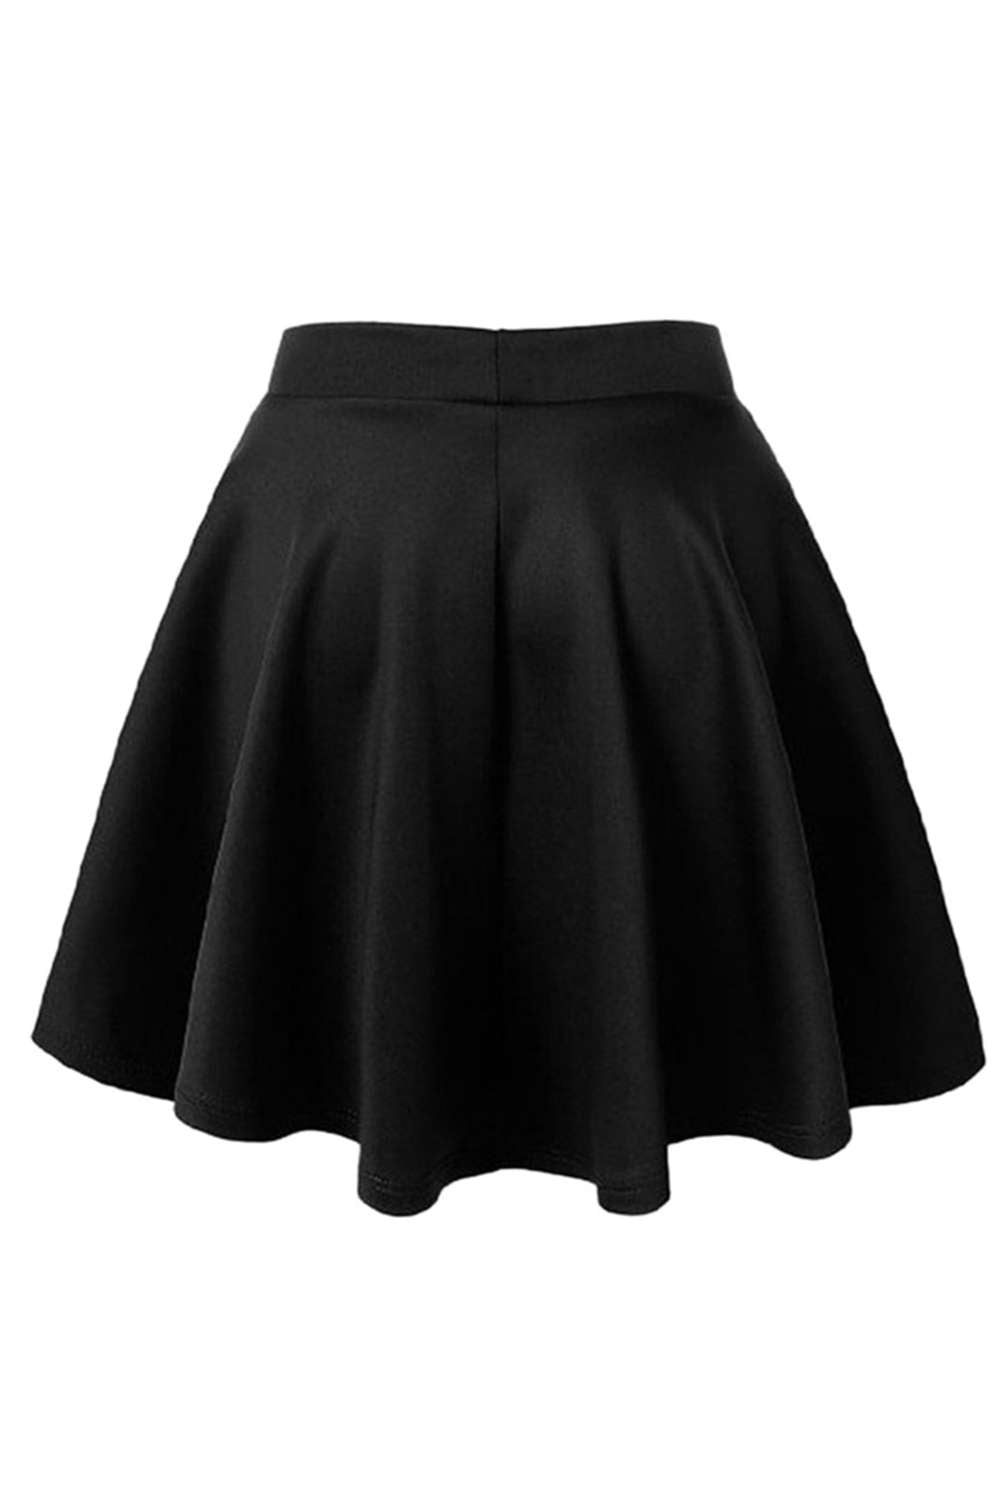 Iyasson Women Flared A-Line Skirt